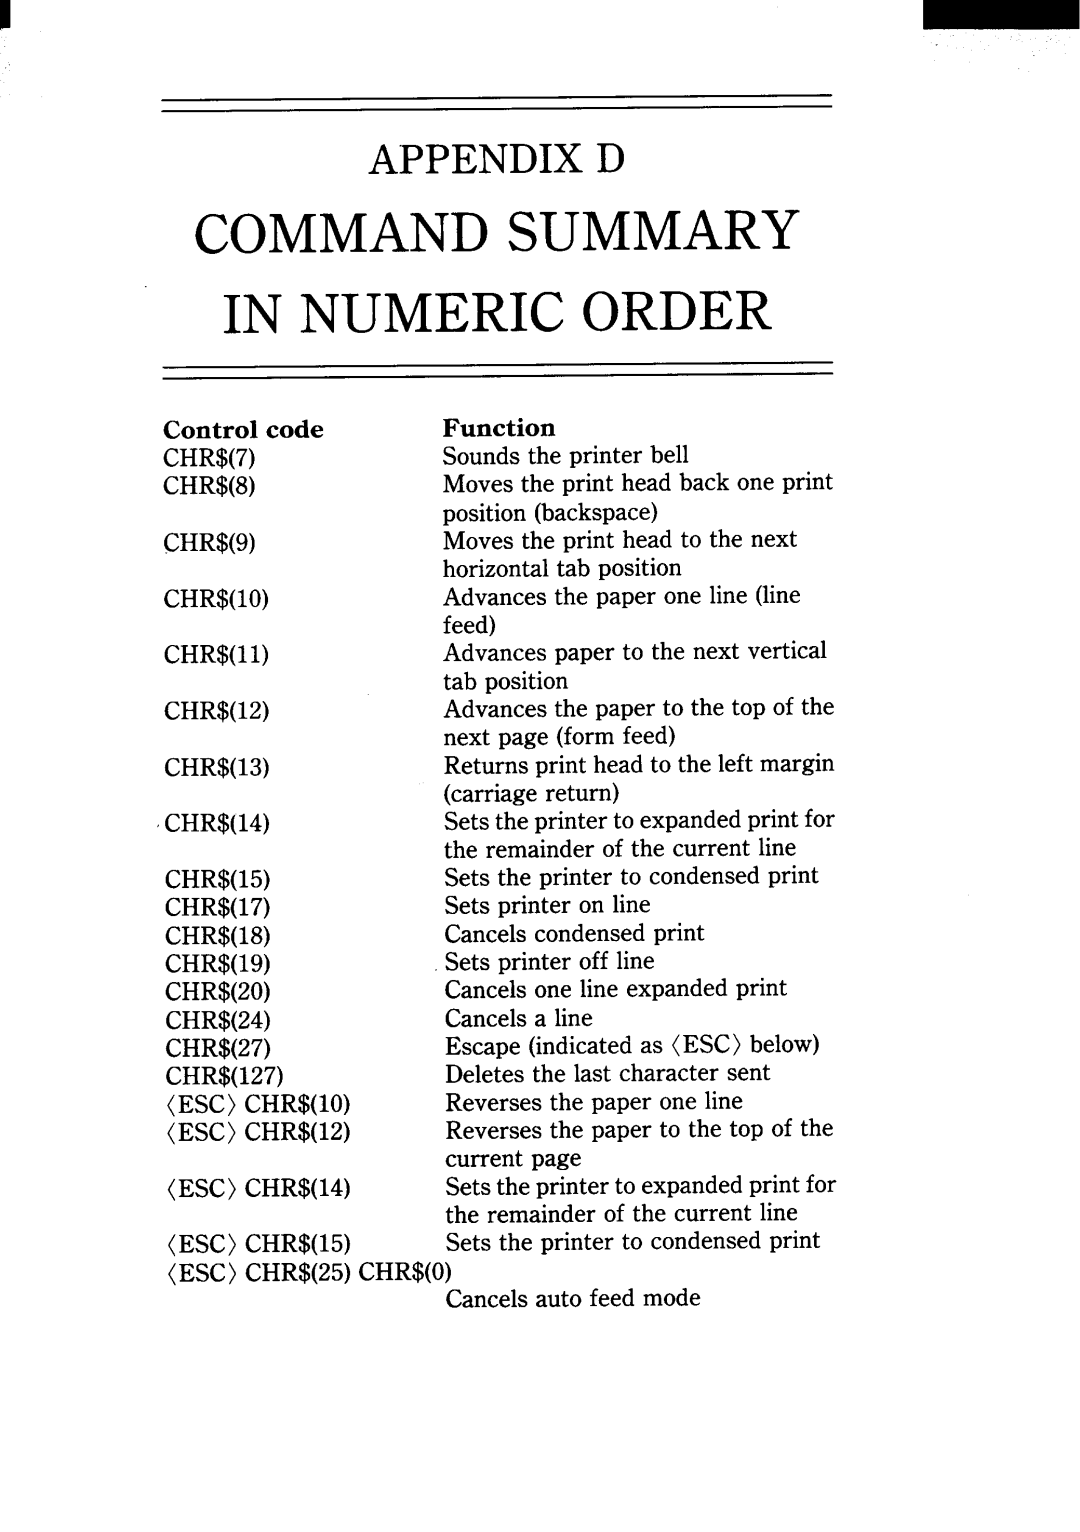 Star Micronics NX-15 user manual Commandsummary In Numericorder, Appendix D 